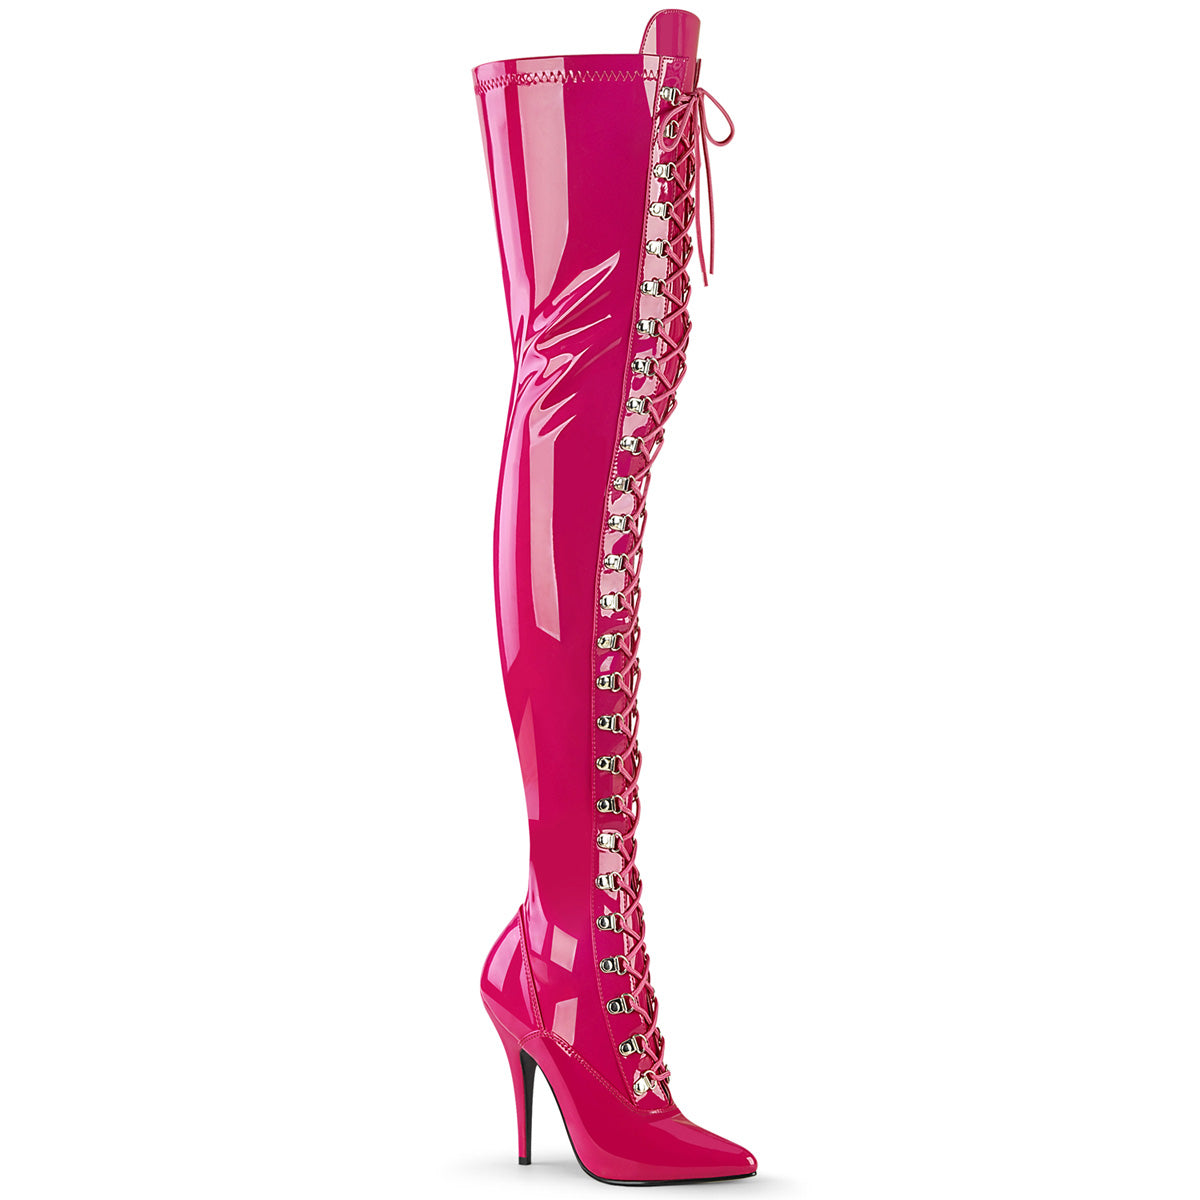 SEDUCE-3024 Hot Pink Thigh Boots